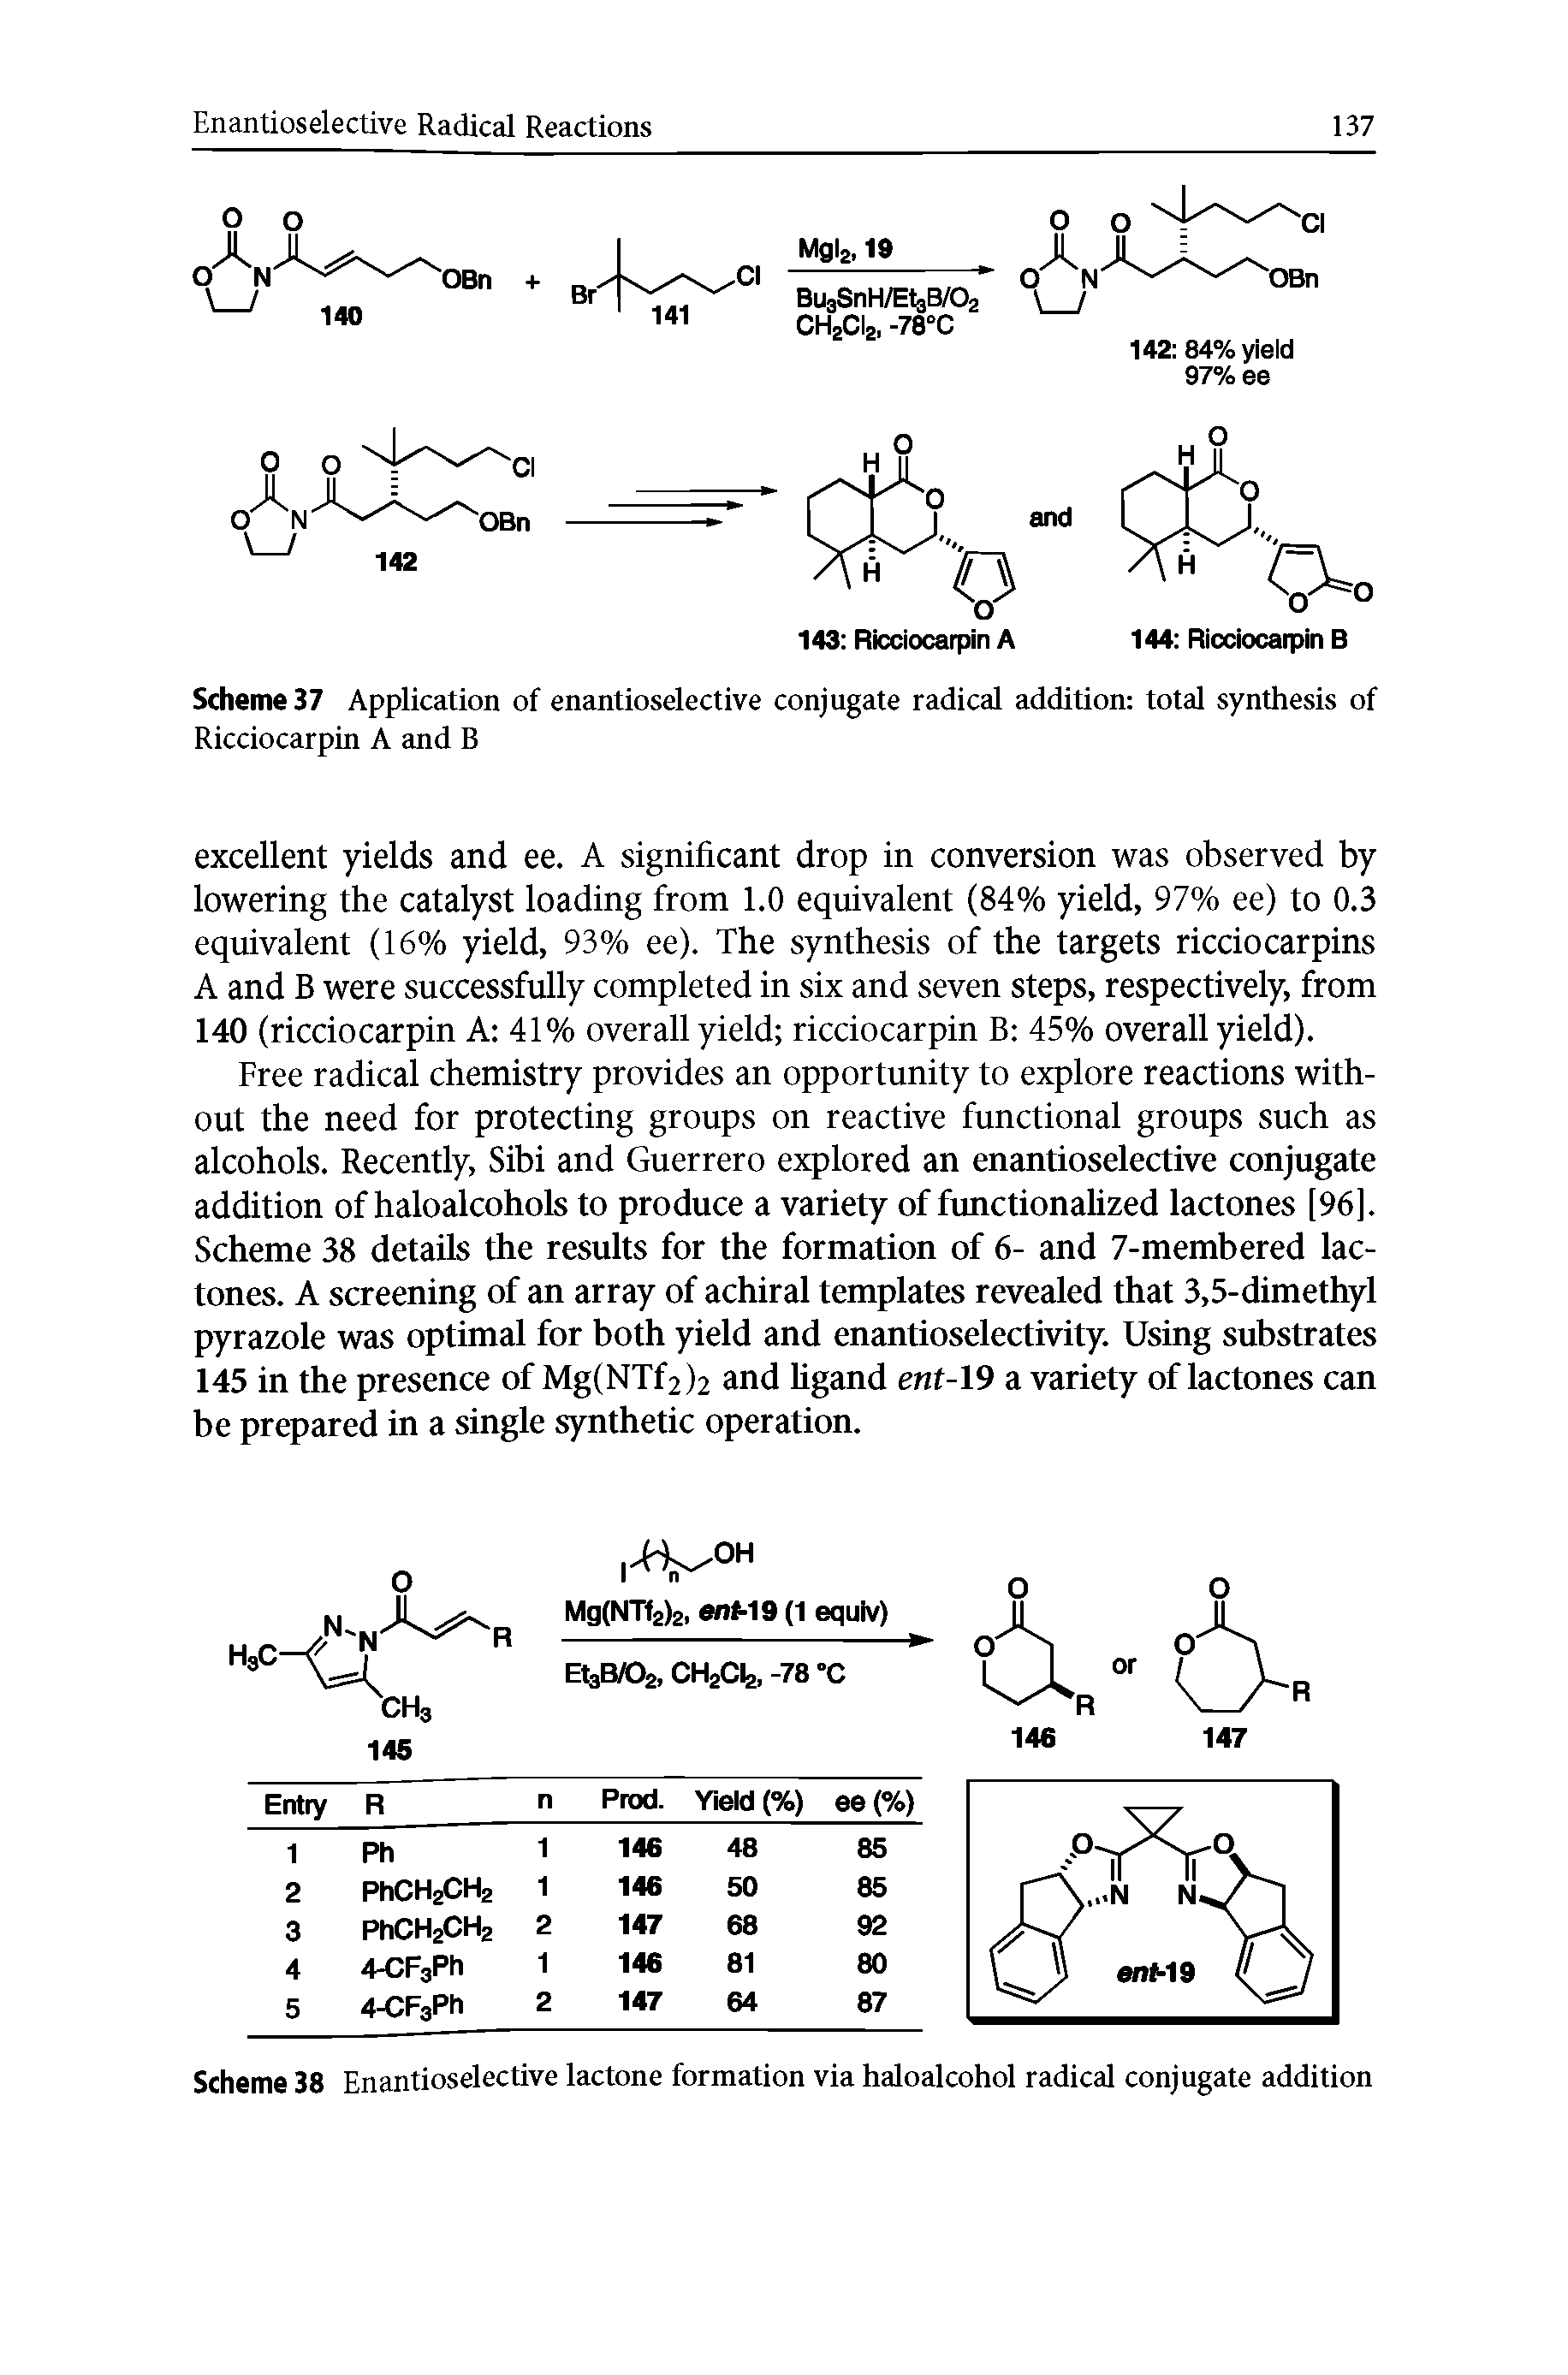 Scheme 38 Enantioselective lactone formation via haloalcohol radical conjugate addition...